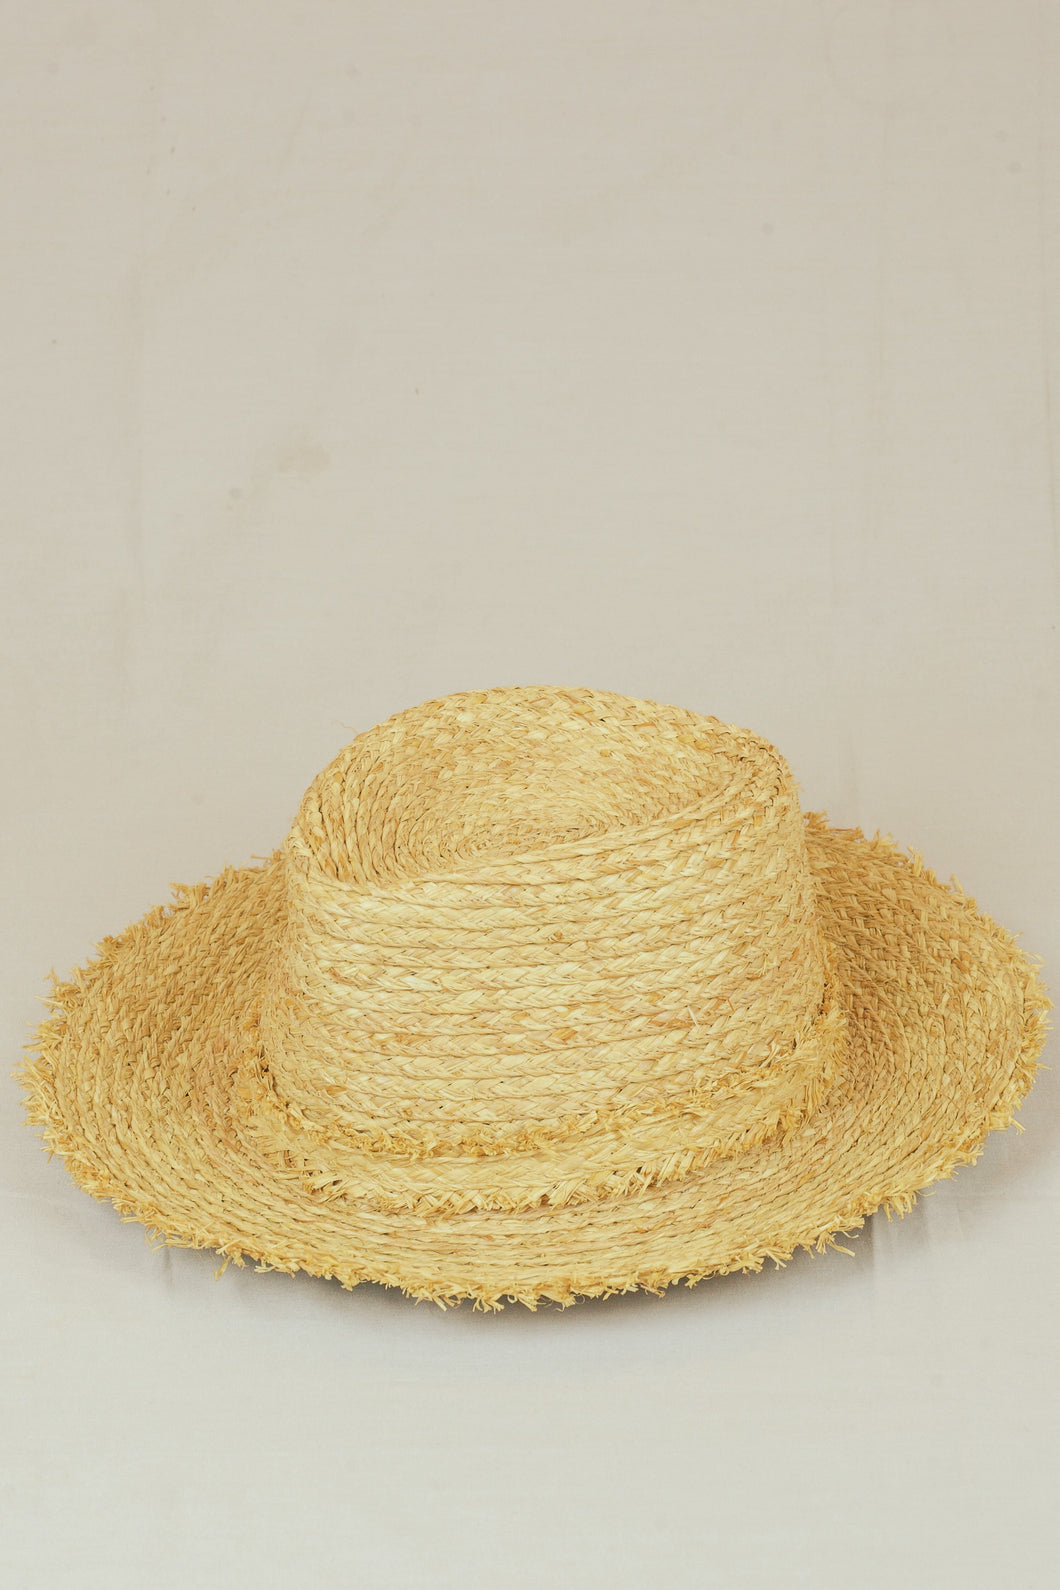 Mekong Lush Urban raffia hat